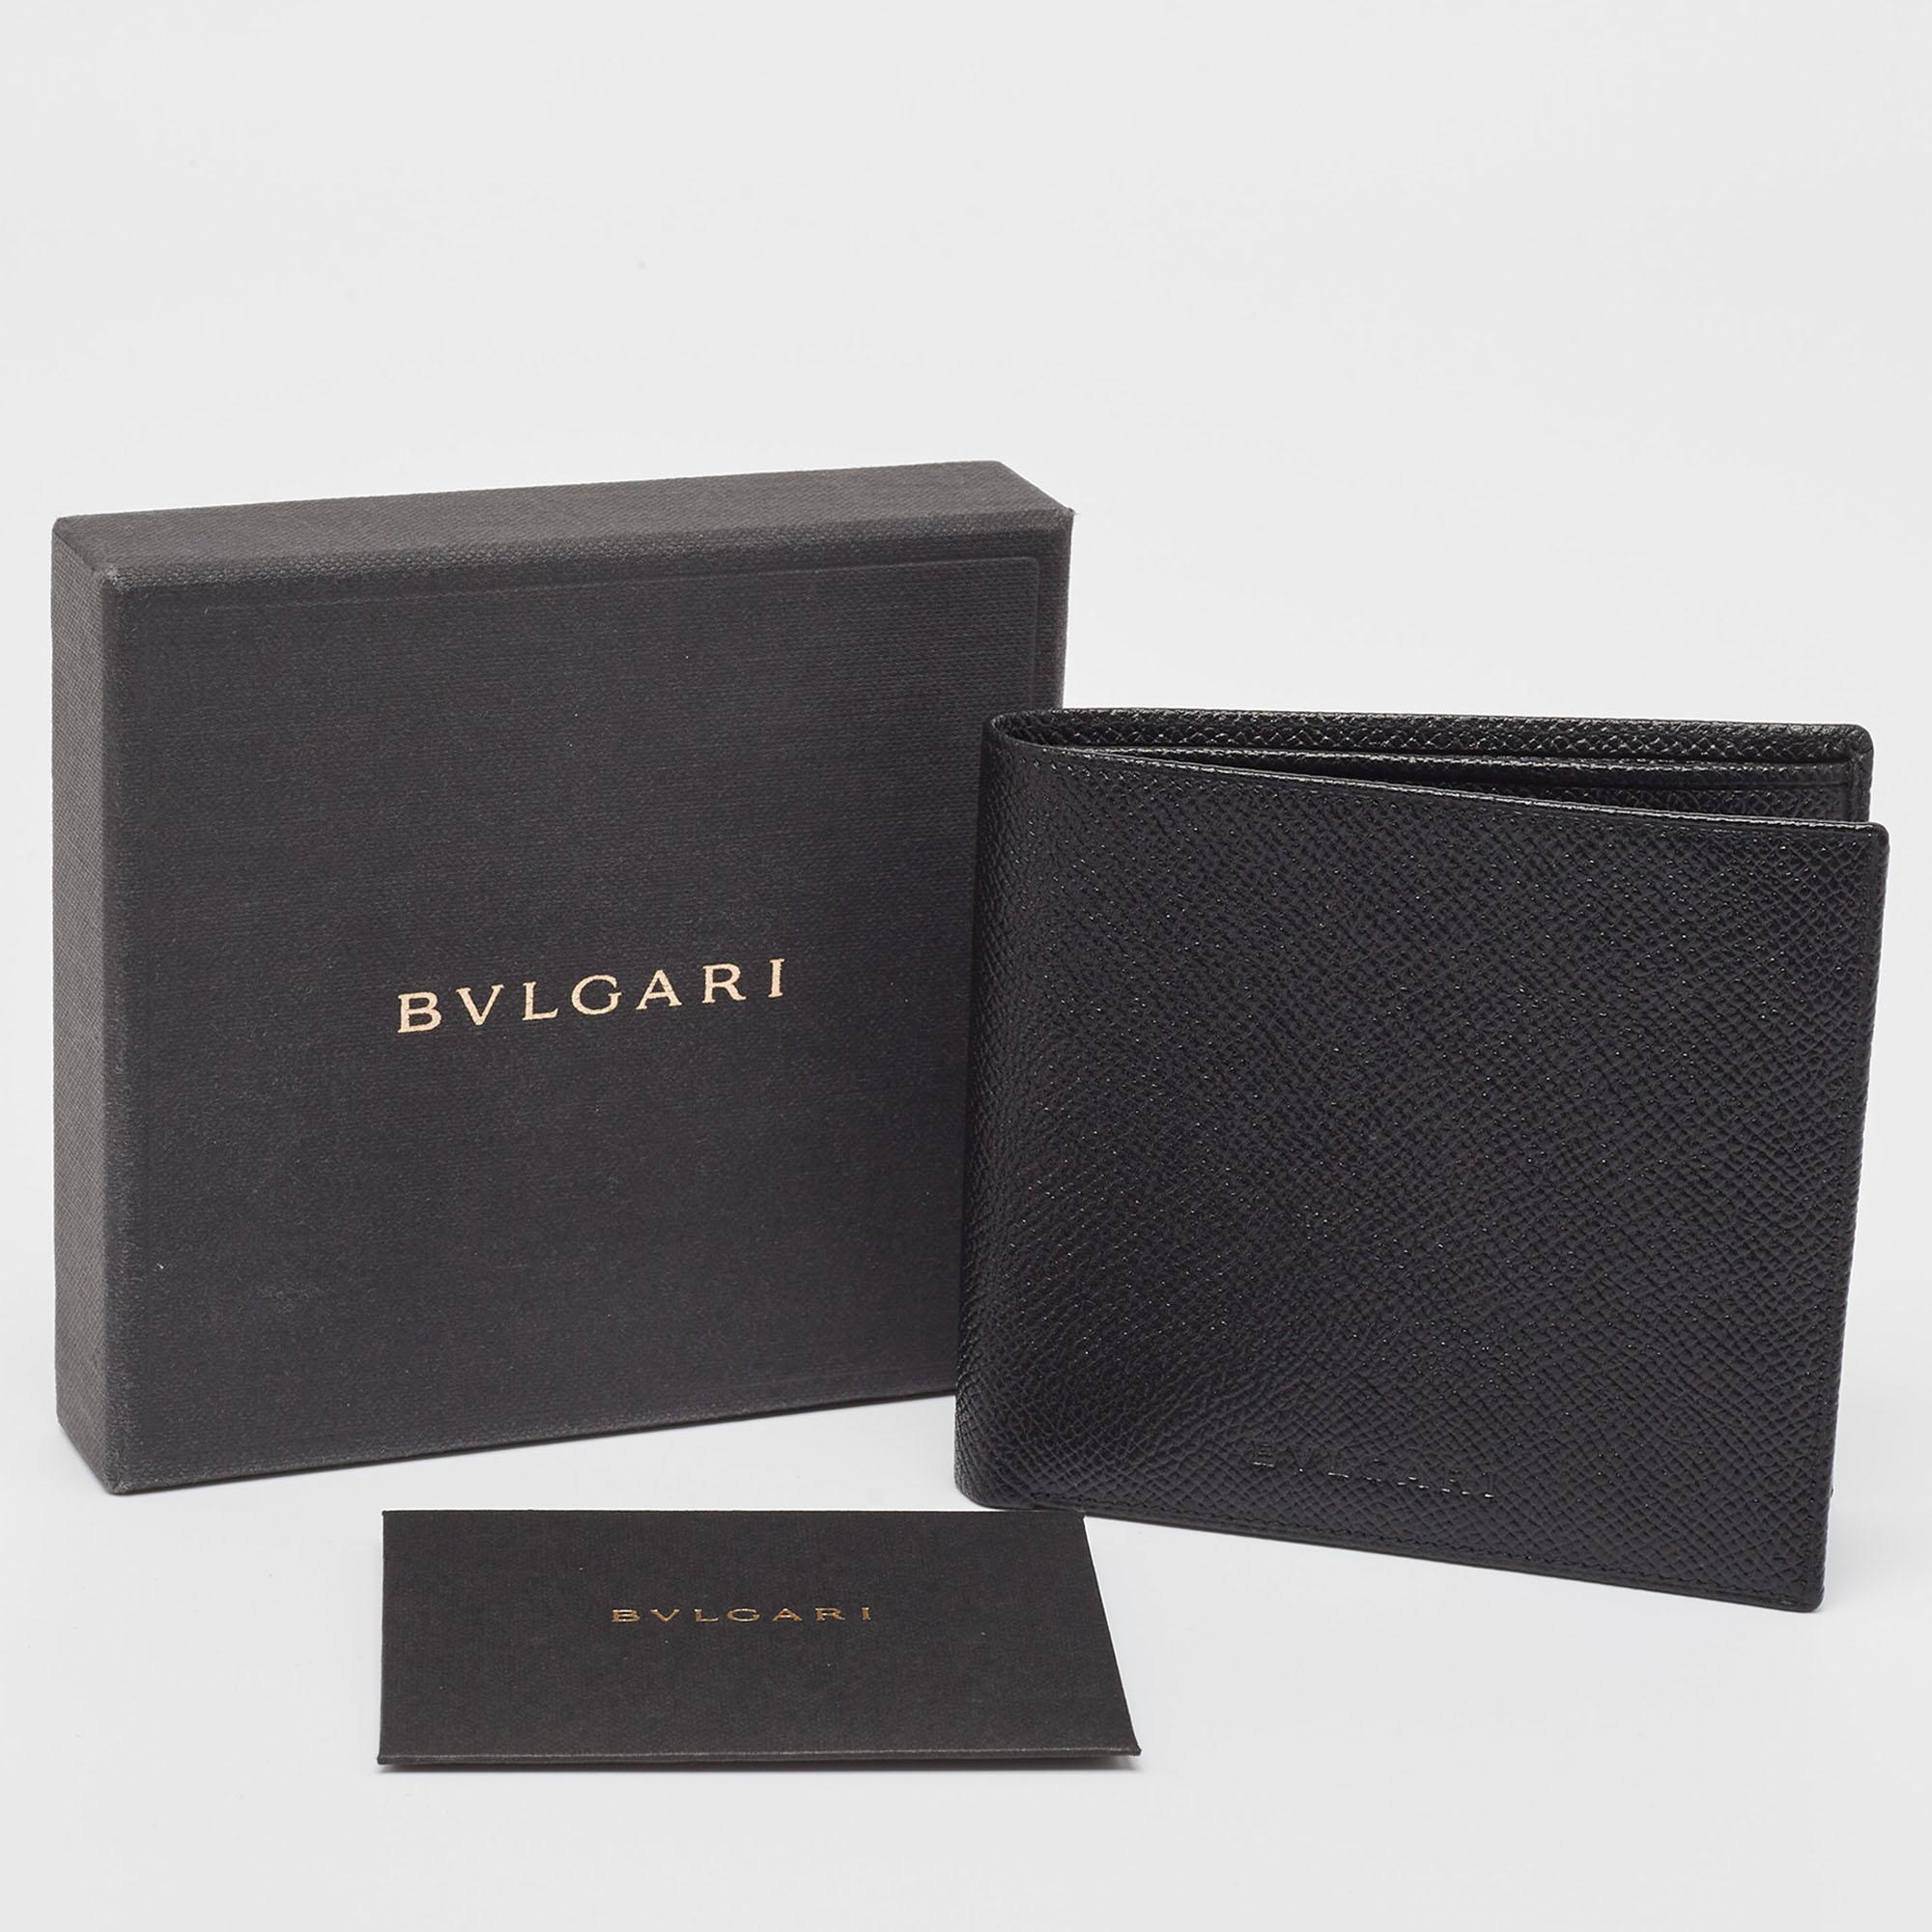 Bvlgari Black Grained Leather Bifold Wallet 8